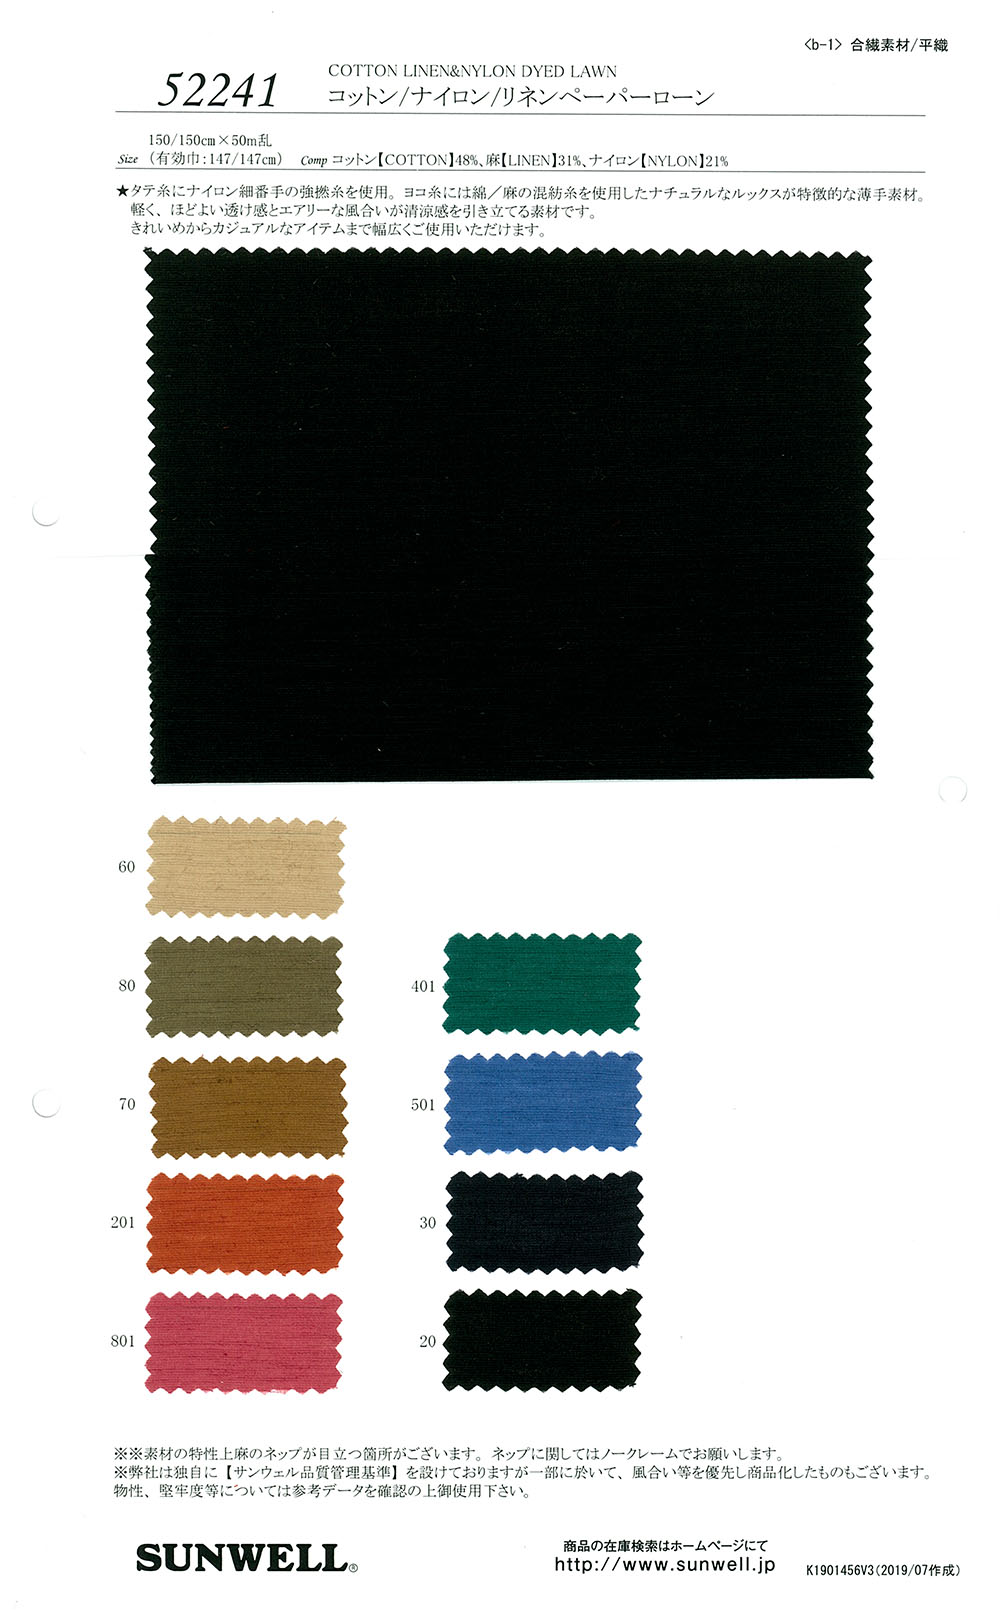 52241 Papierrasen Aus Baumwolle/Nylon/Leinen[Textilgewebe] SUNWELL